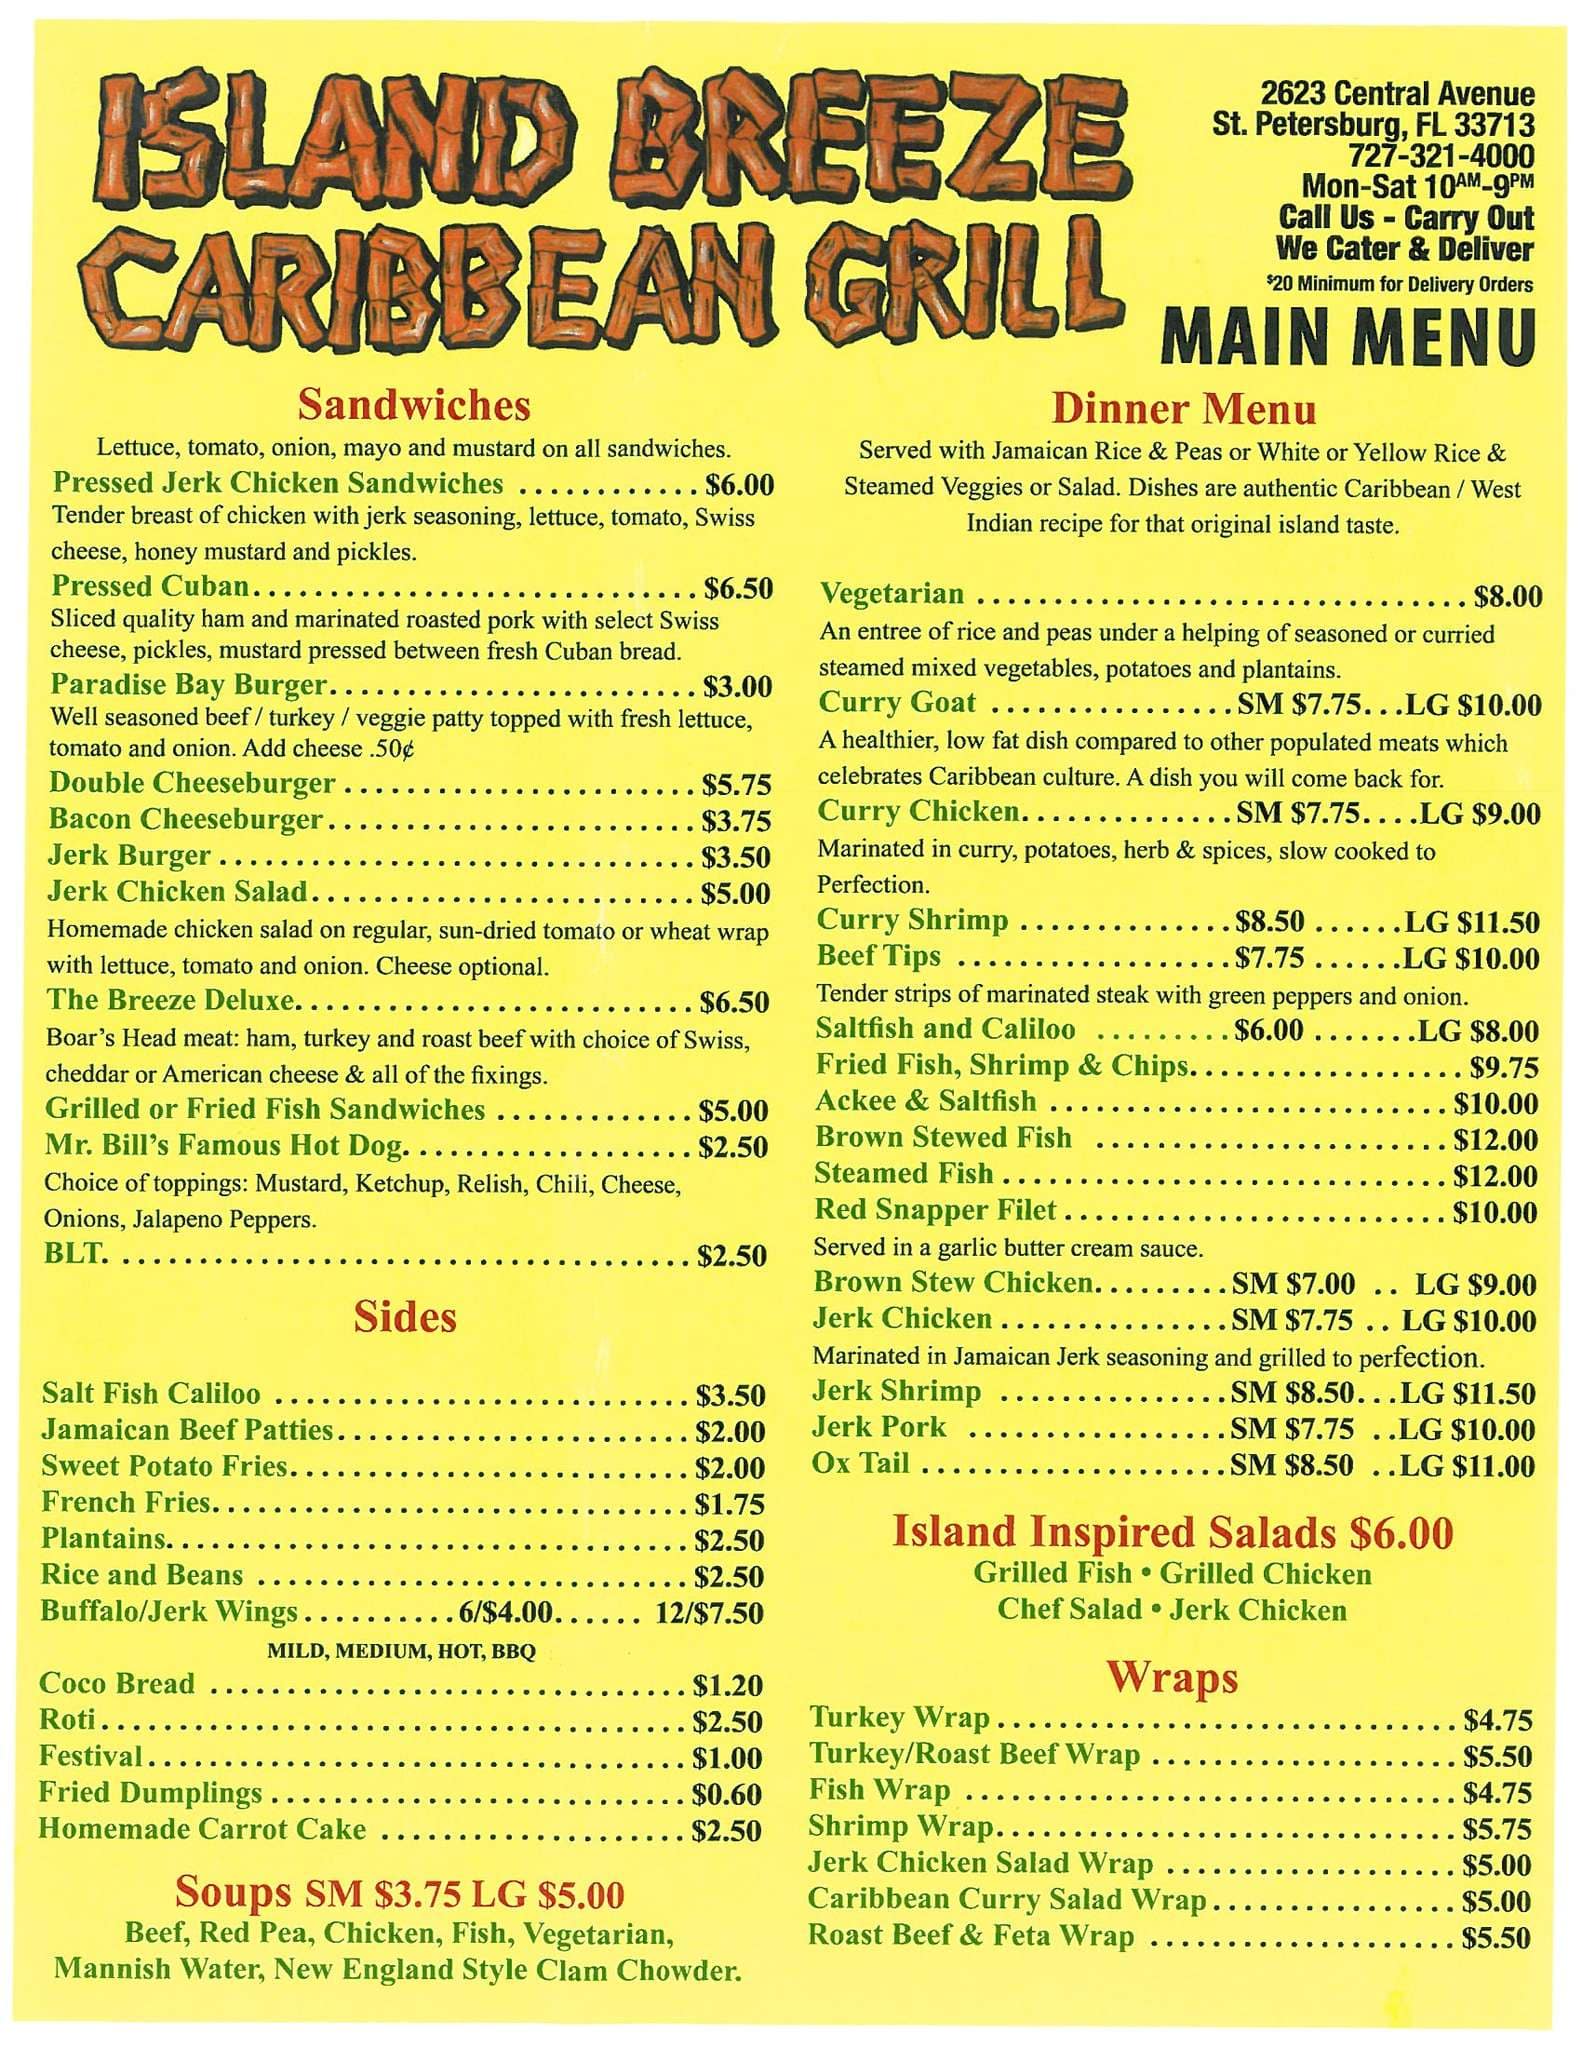 bahama breeze menu pictures